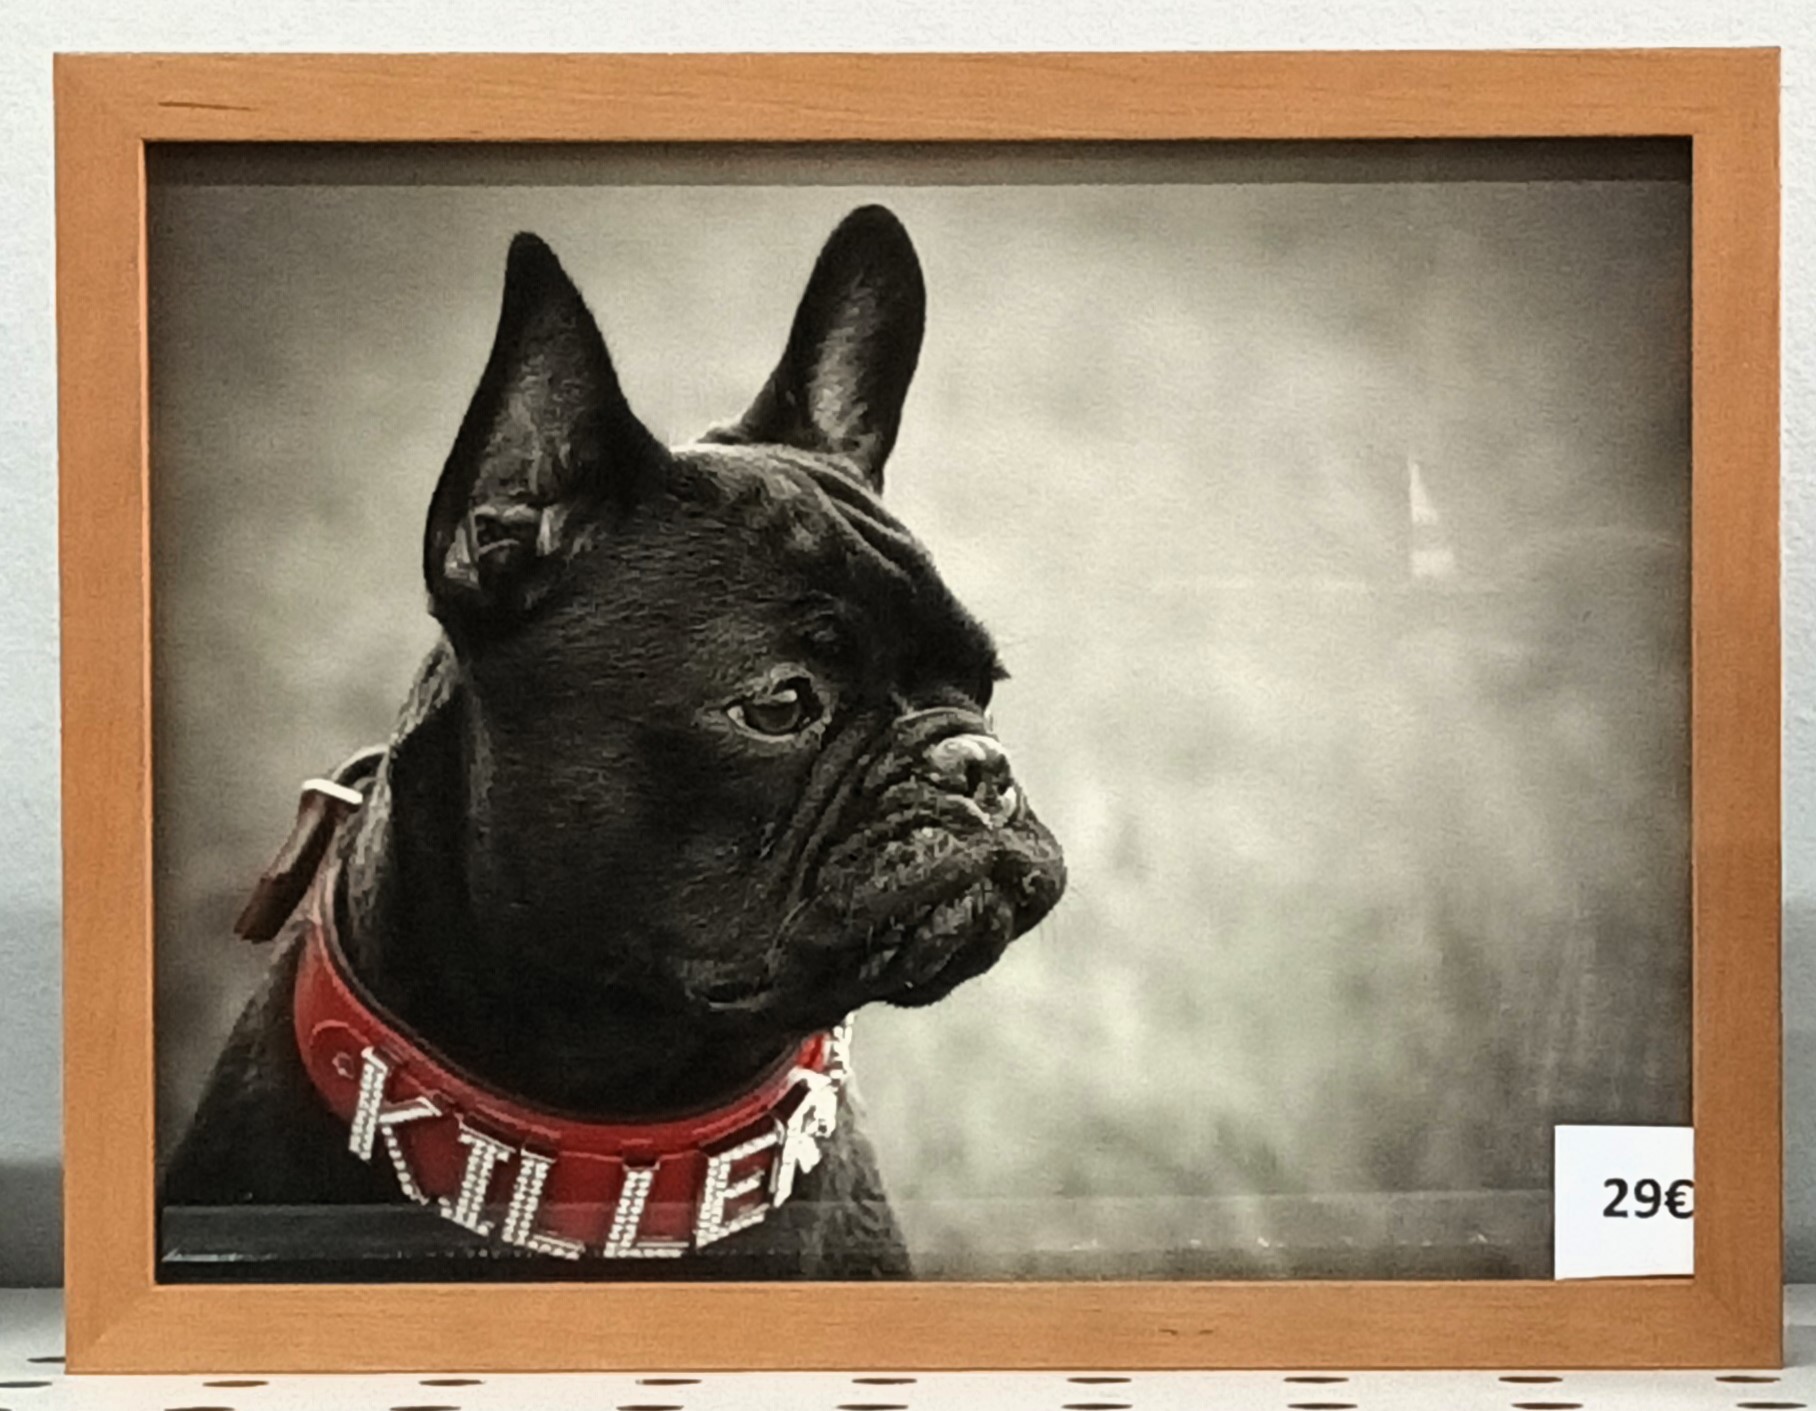 Frenchi Titel: "Killer" Fotografie fertig eingerahmt